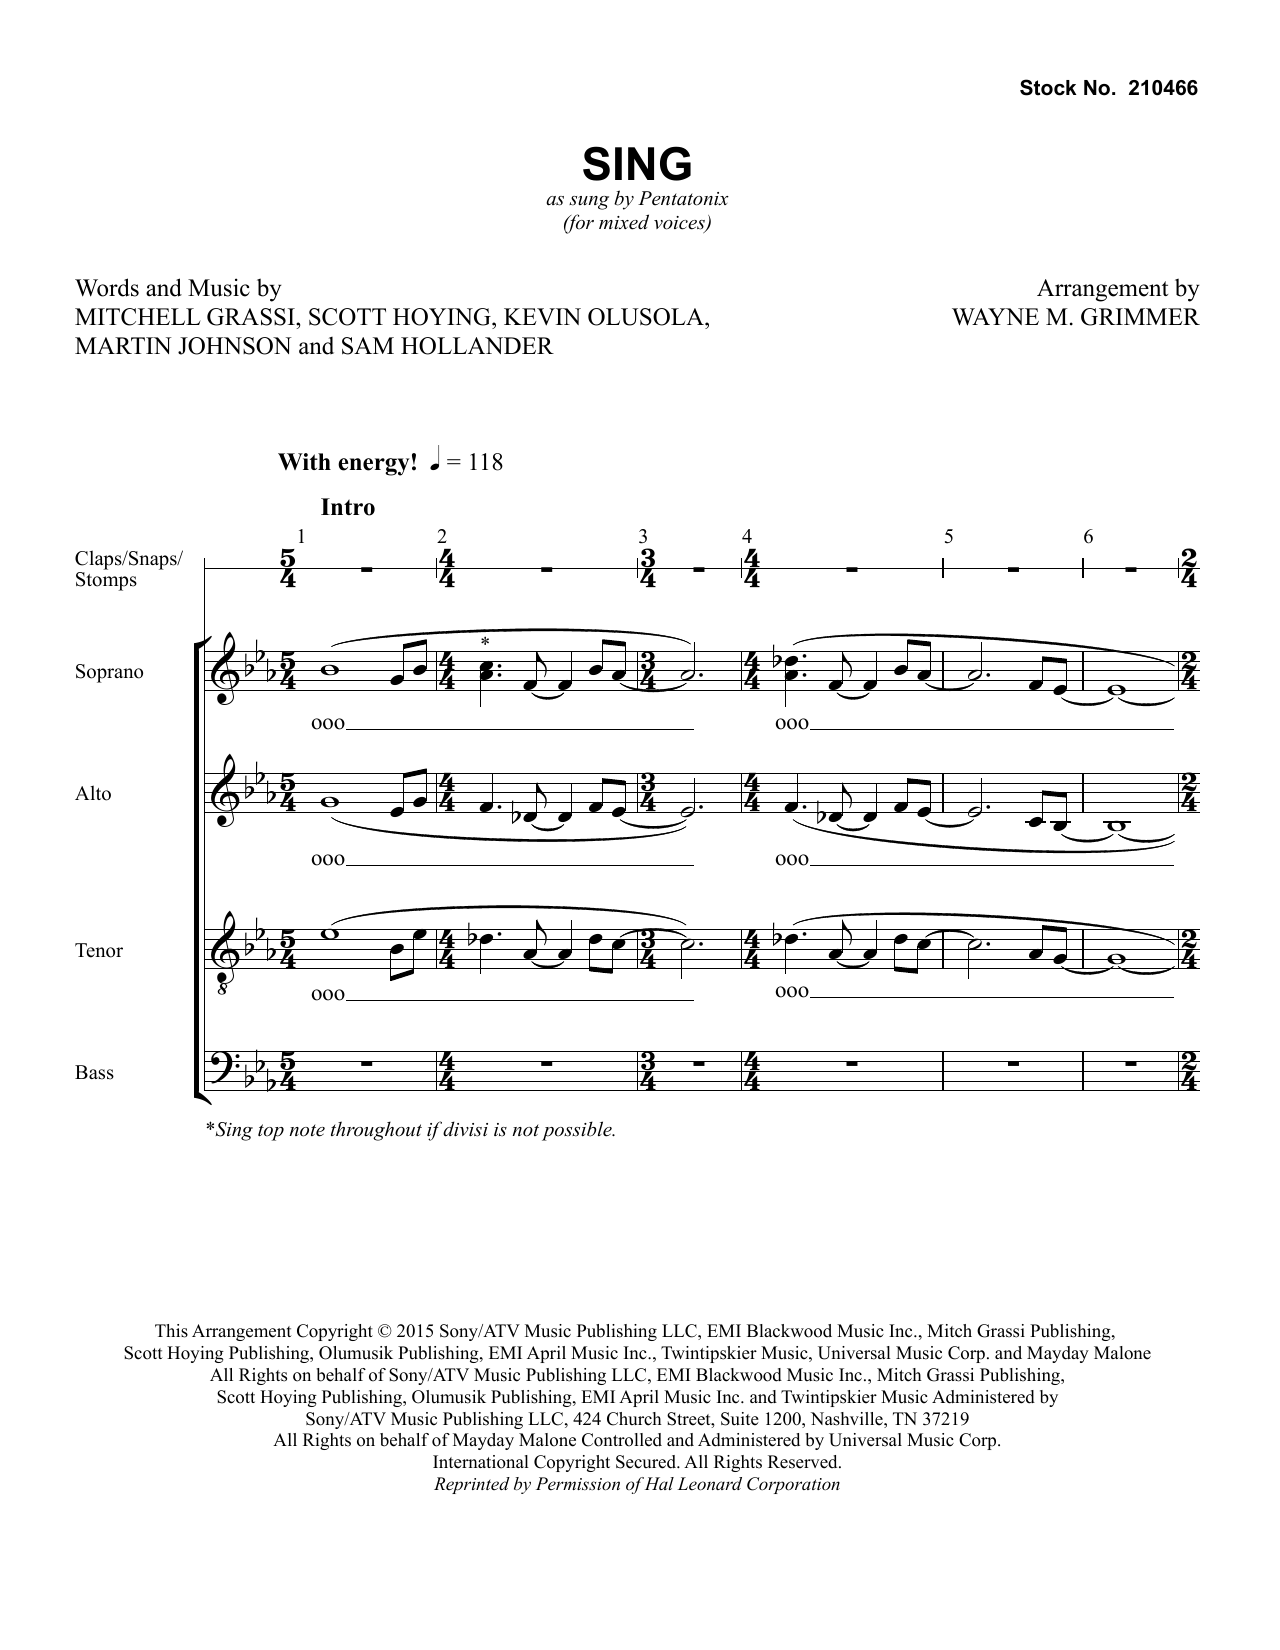 Pentatonix Sing (arr. Wayne Grimmer) Sheet Music Notes & Chords for SSA Choir - Download or Print PDF